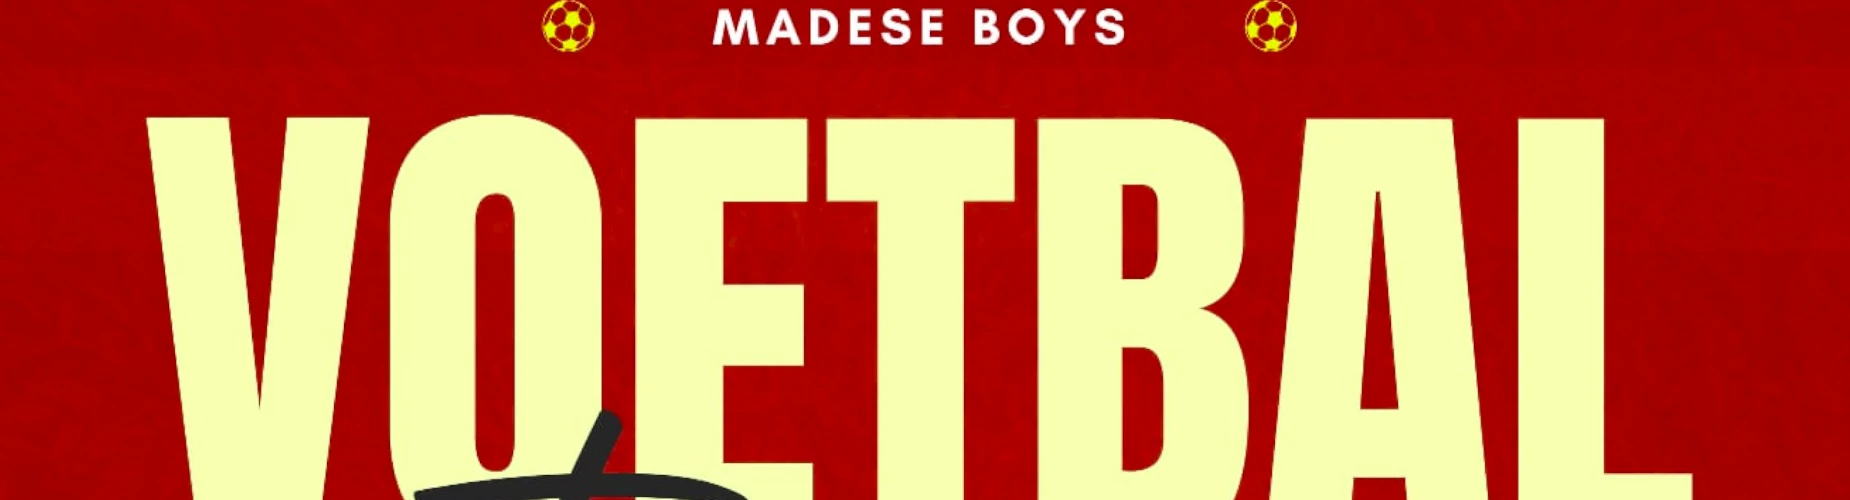 Banner - O8 - Madeseboys - Madese Boys - Made